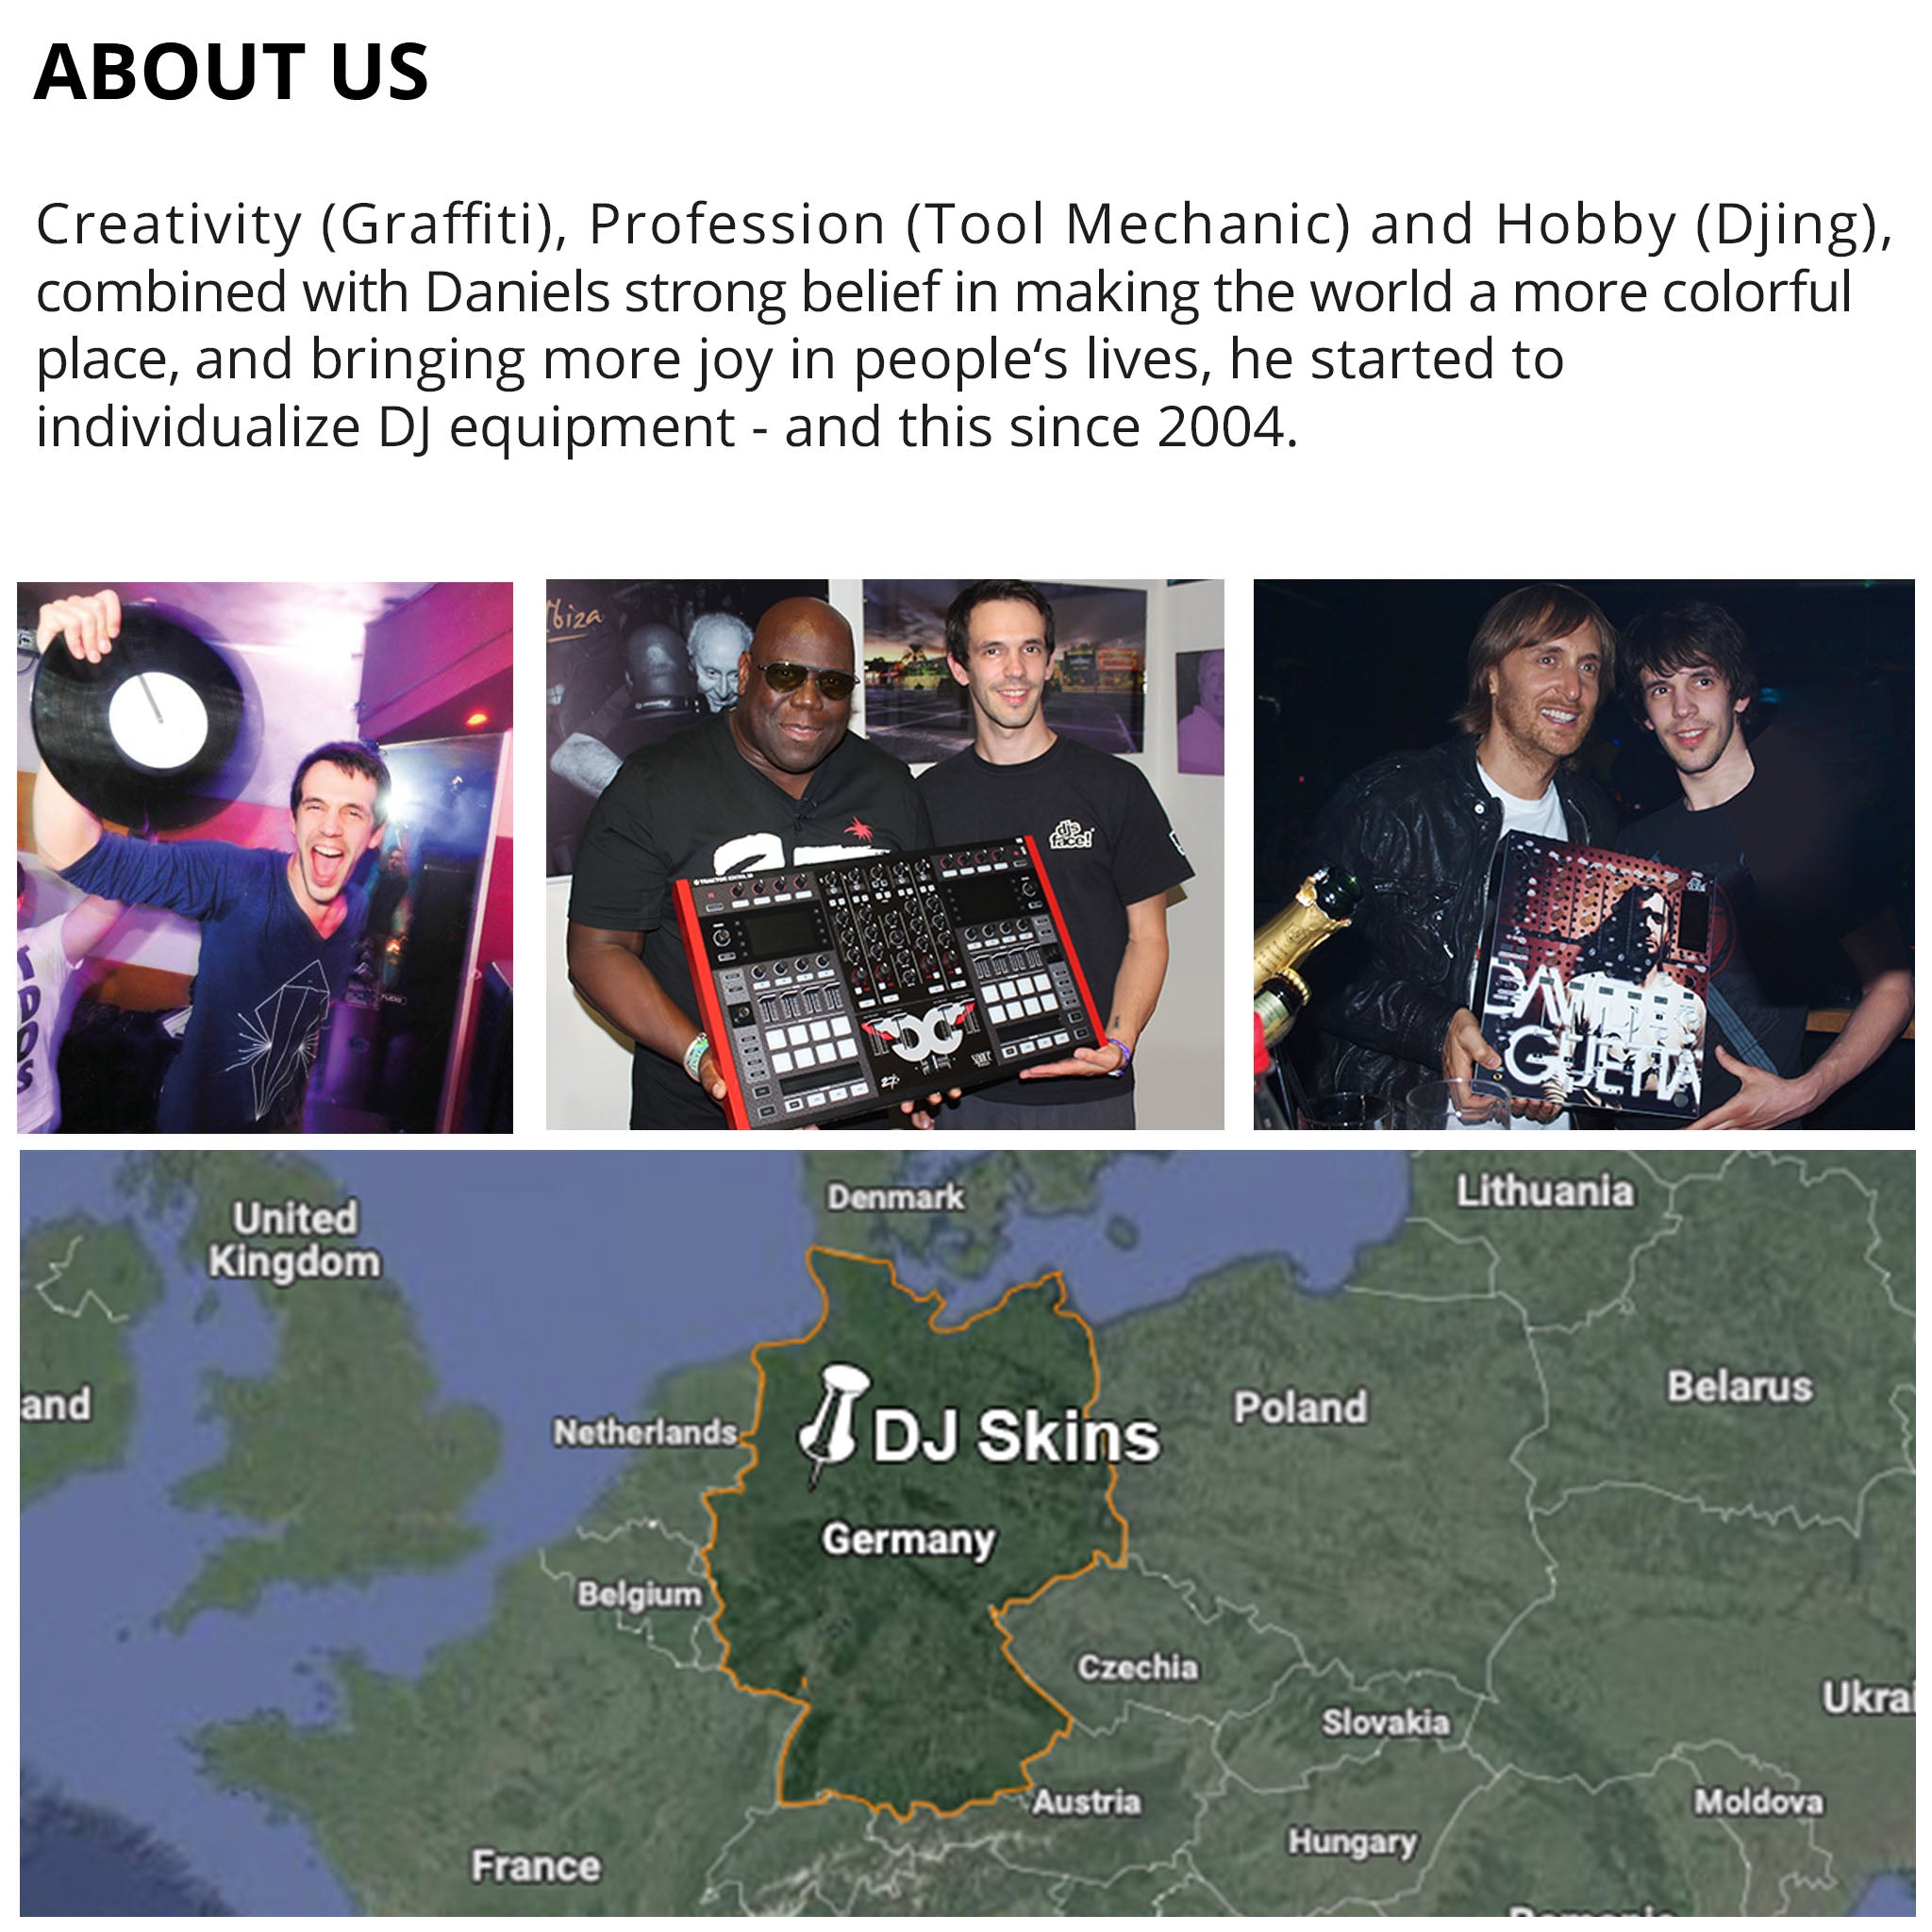 Pioneer DJ DJM S11 Skin Minimal Rainbow